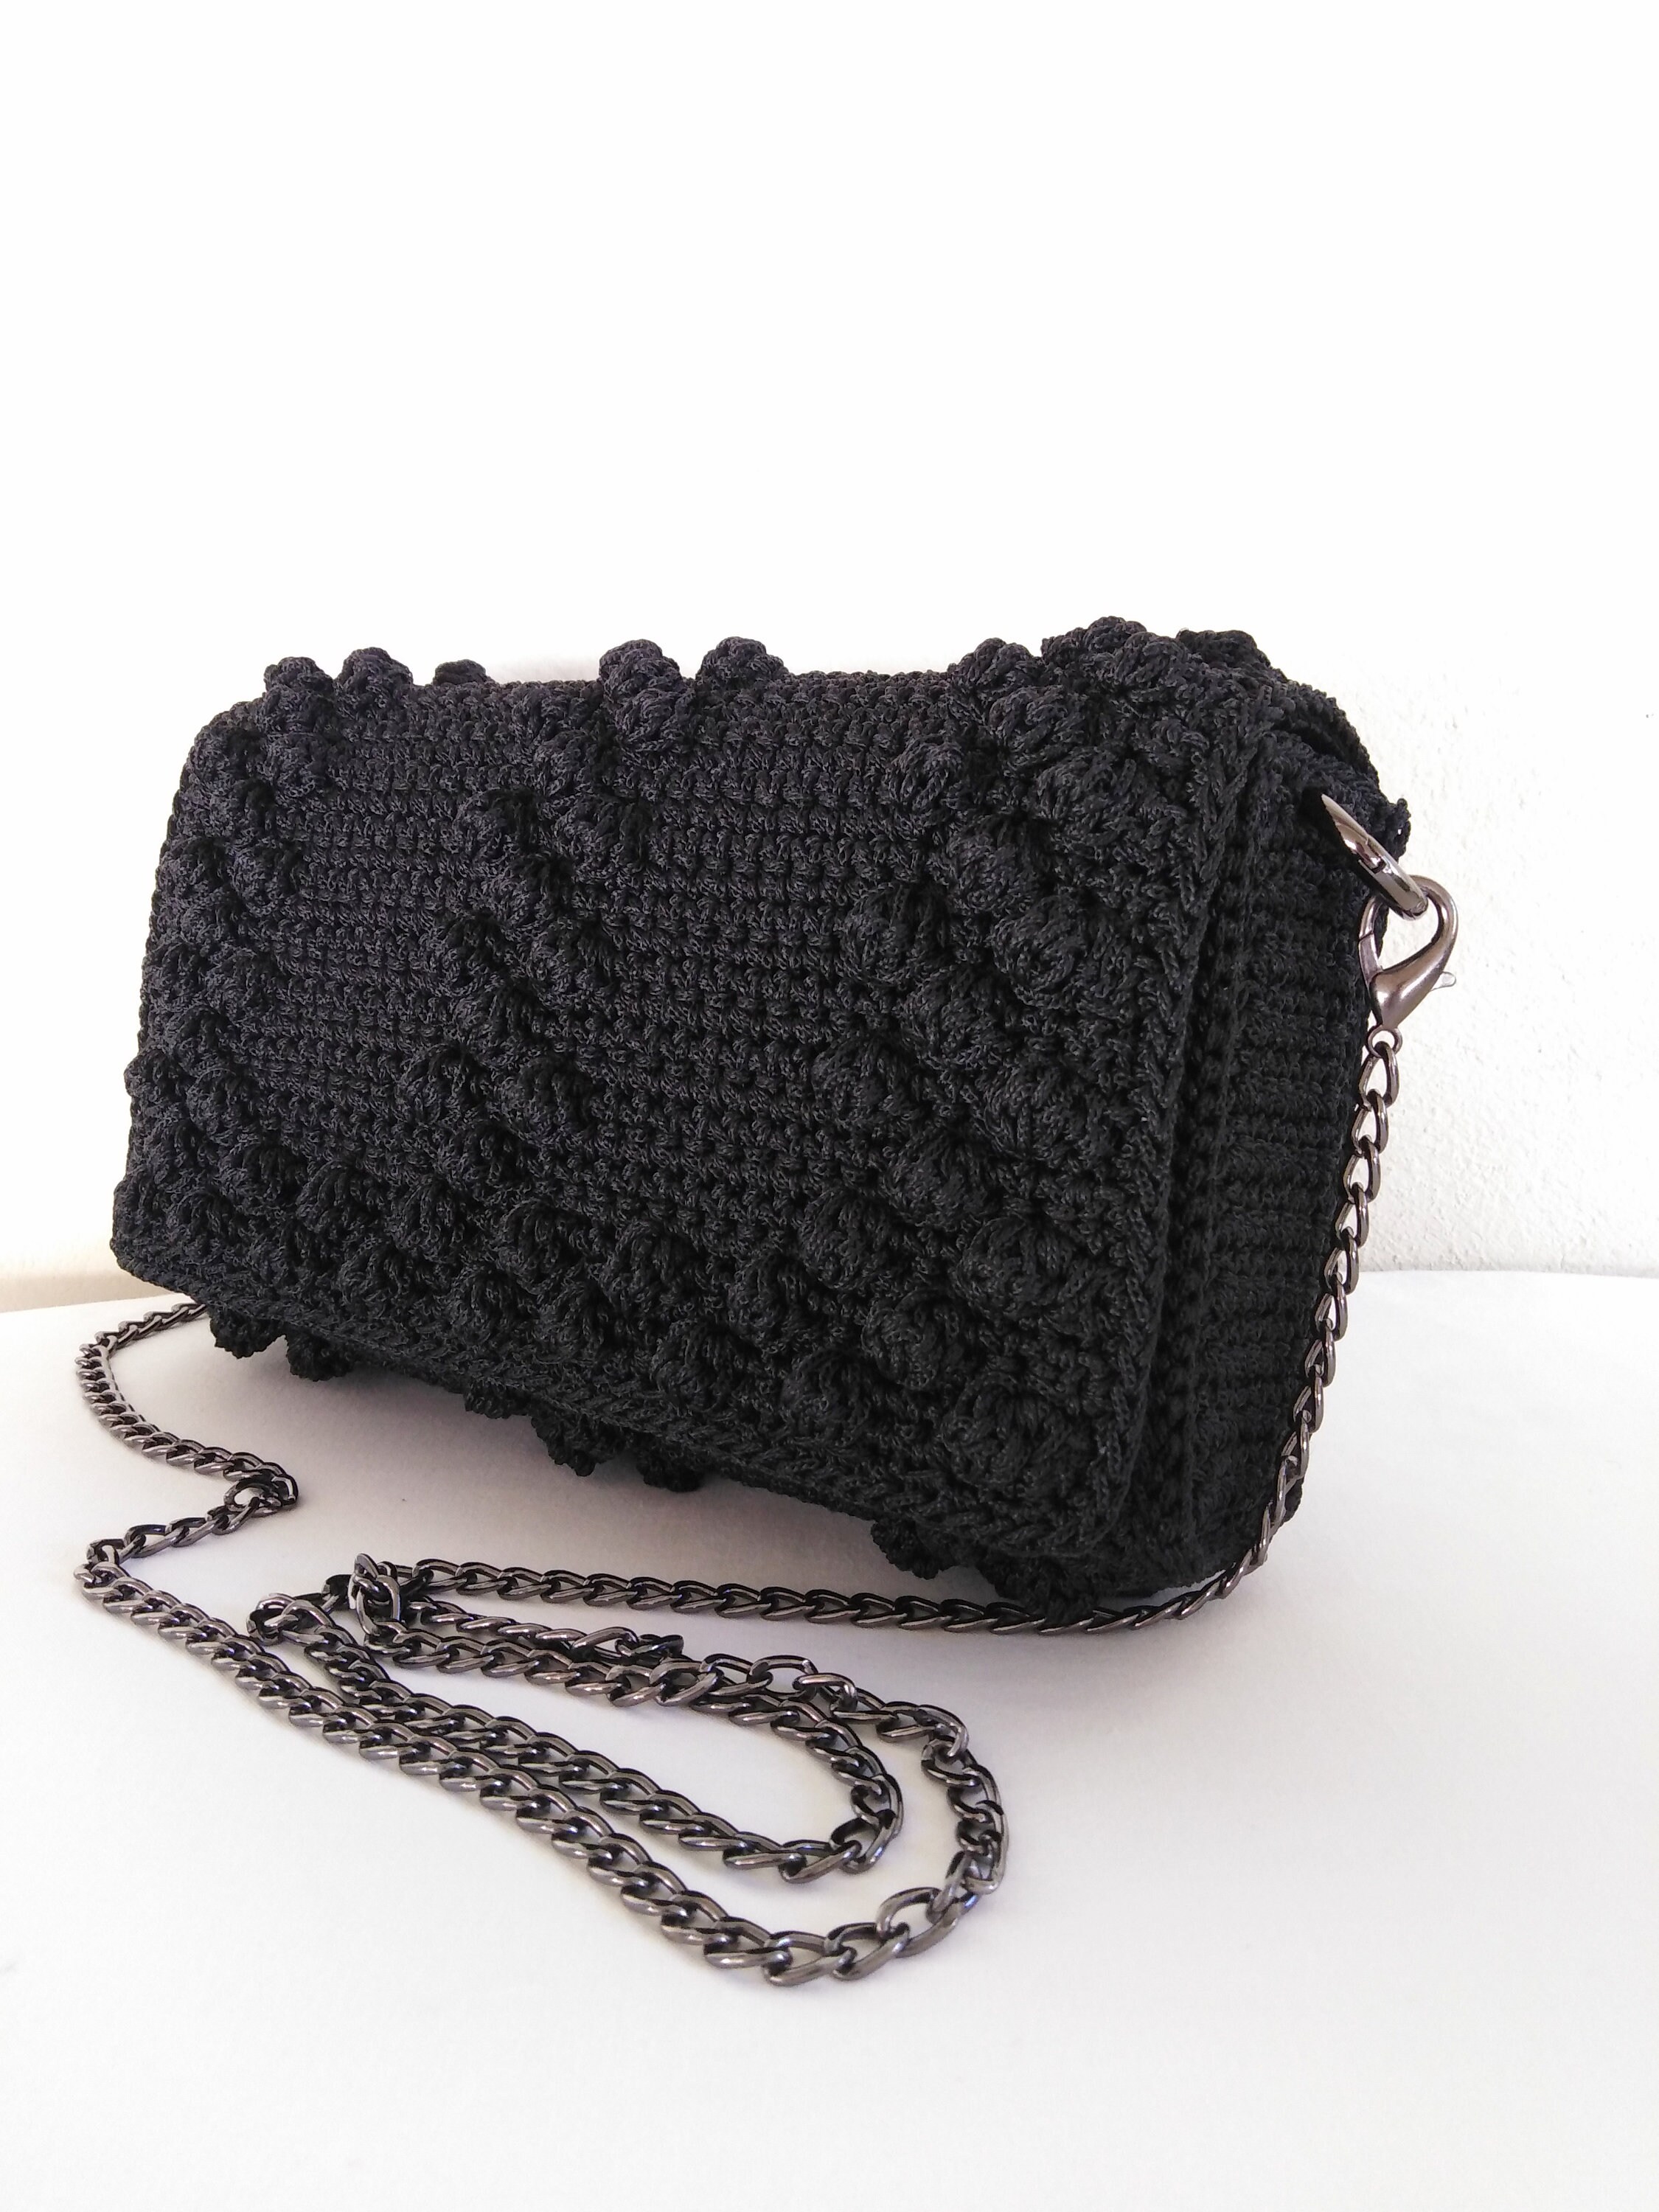 Handmade Crossbody Bag, Knitted Clutch Bag, Crochet Bag with Bubbles